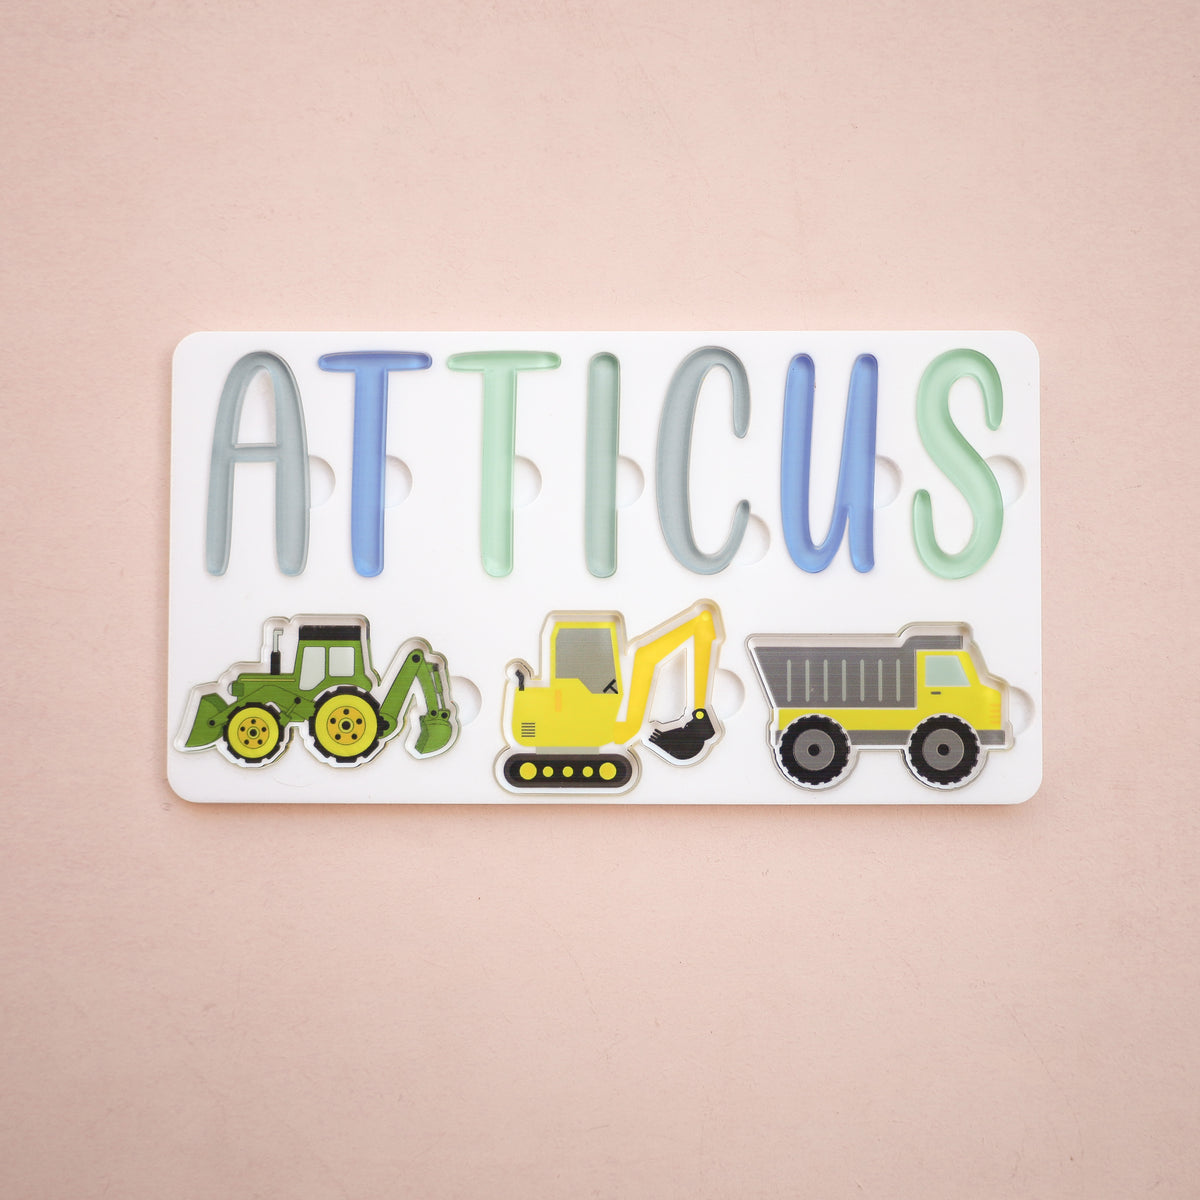 Acrylic Puzzle - Personalised Name - Truck Theme